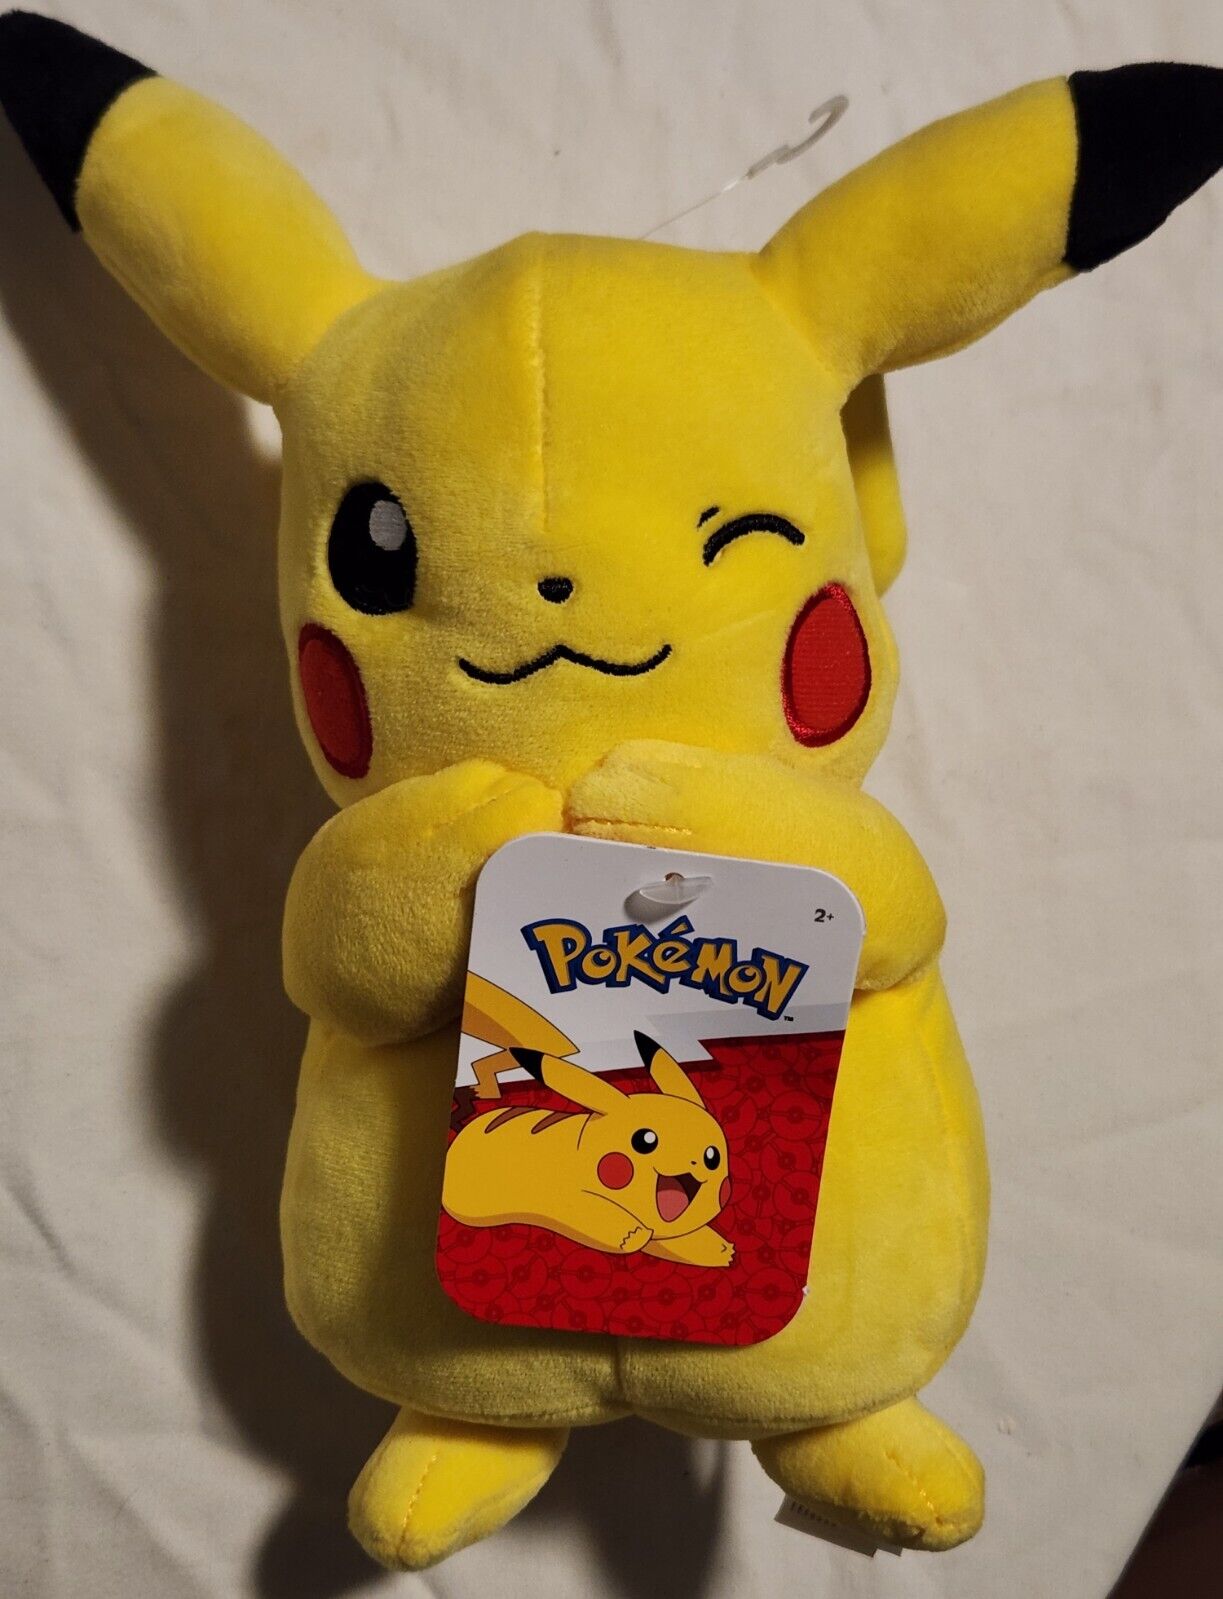 Pokemon Small Plush - Pikachu -  winking - 8 inch - NEW with tags